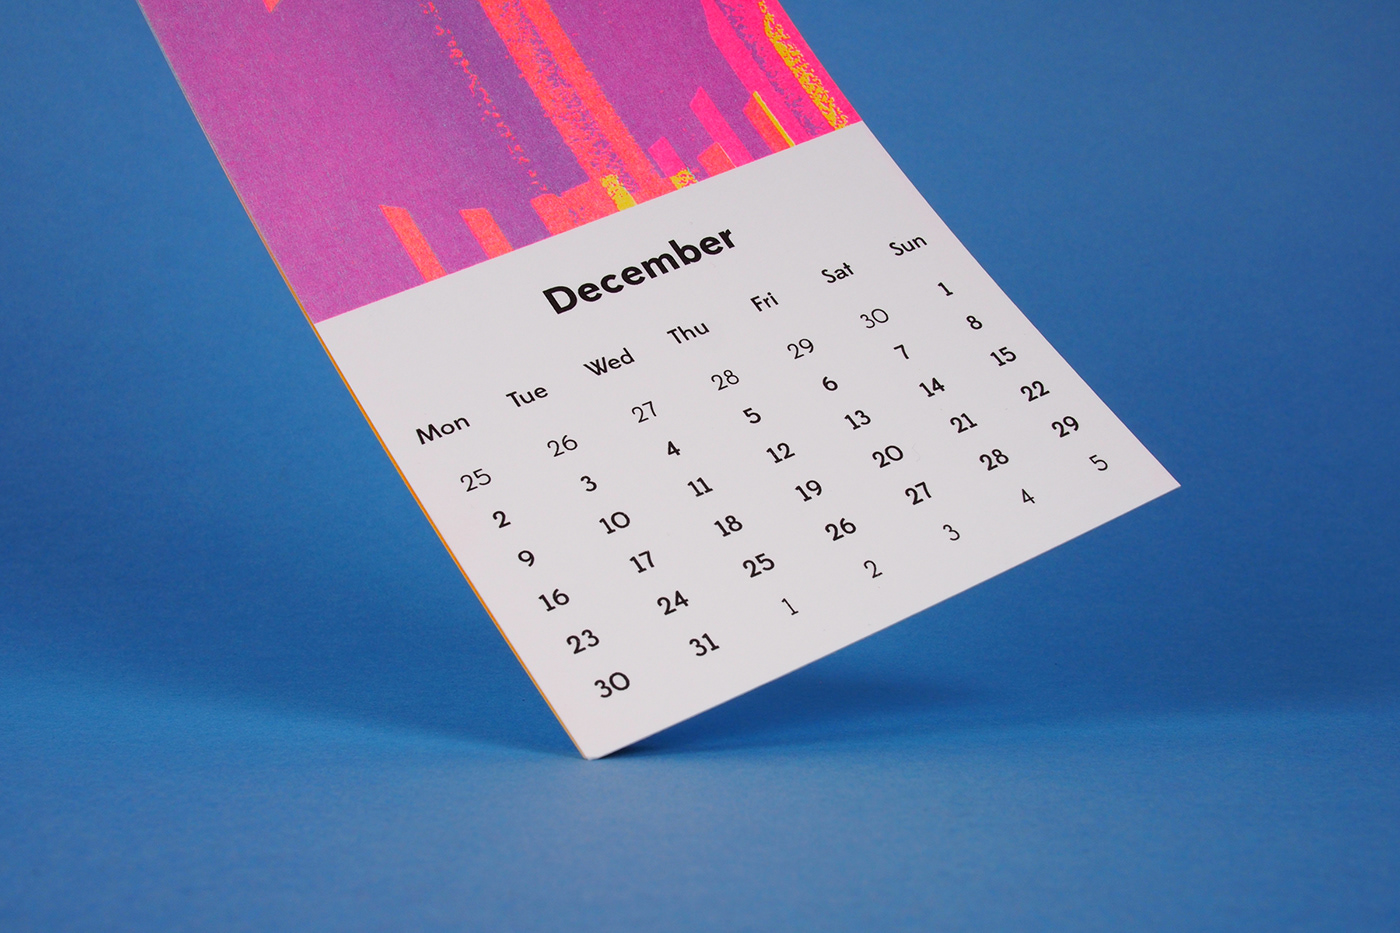 calendar calendar design colors gradients texture print Layout colorful abstract risograph